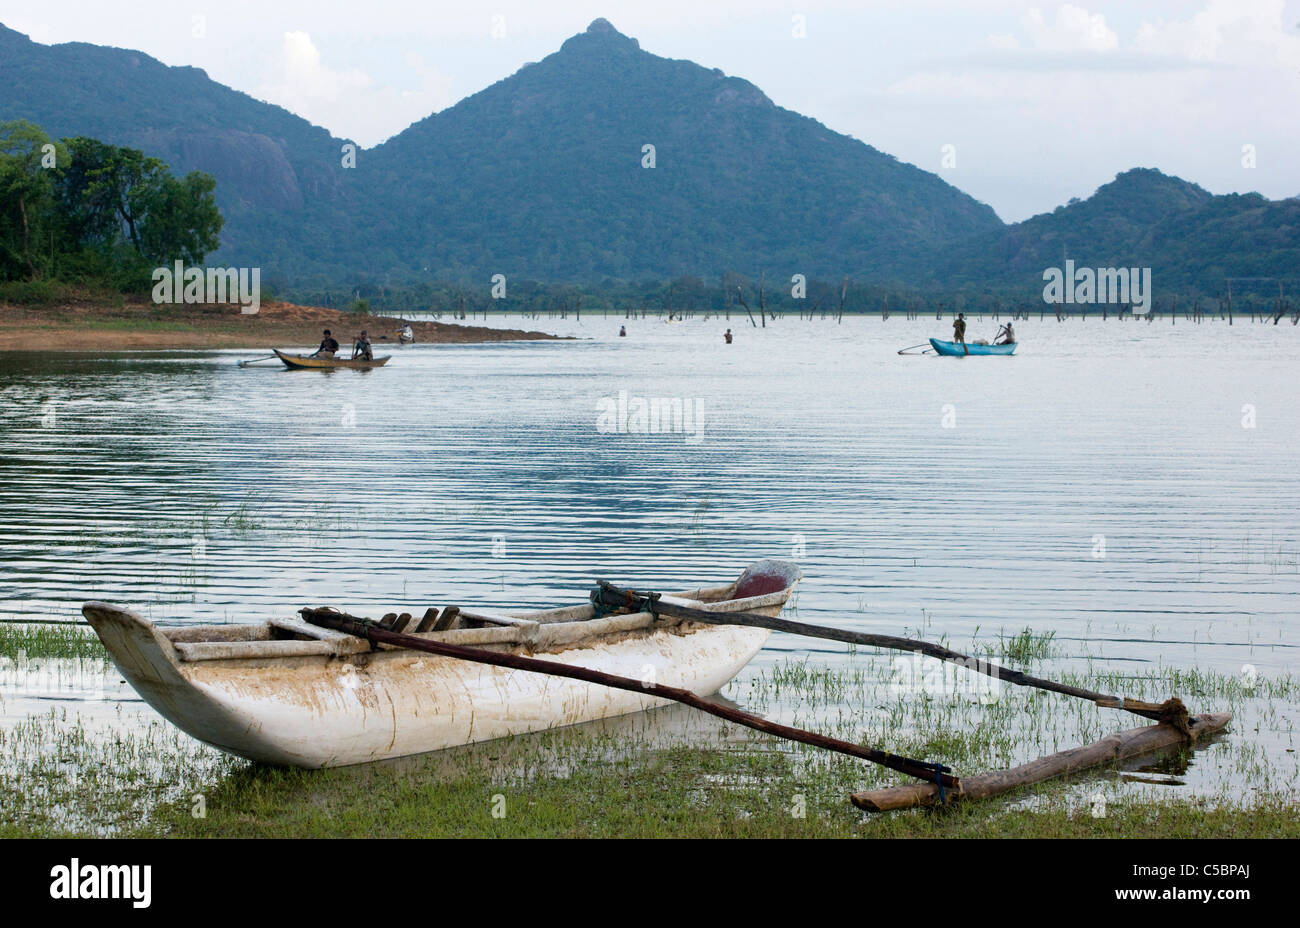 A traditional fishing boat on the shore of Kandalama lake. Sri Lanka. Stock Photo